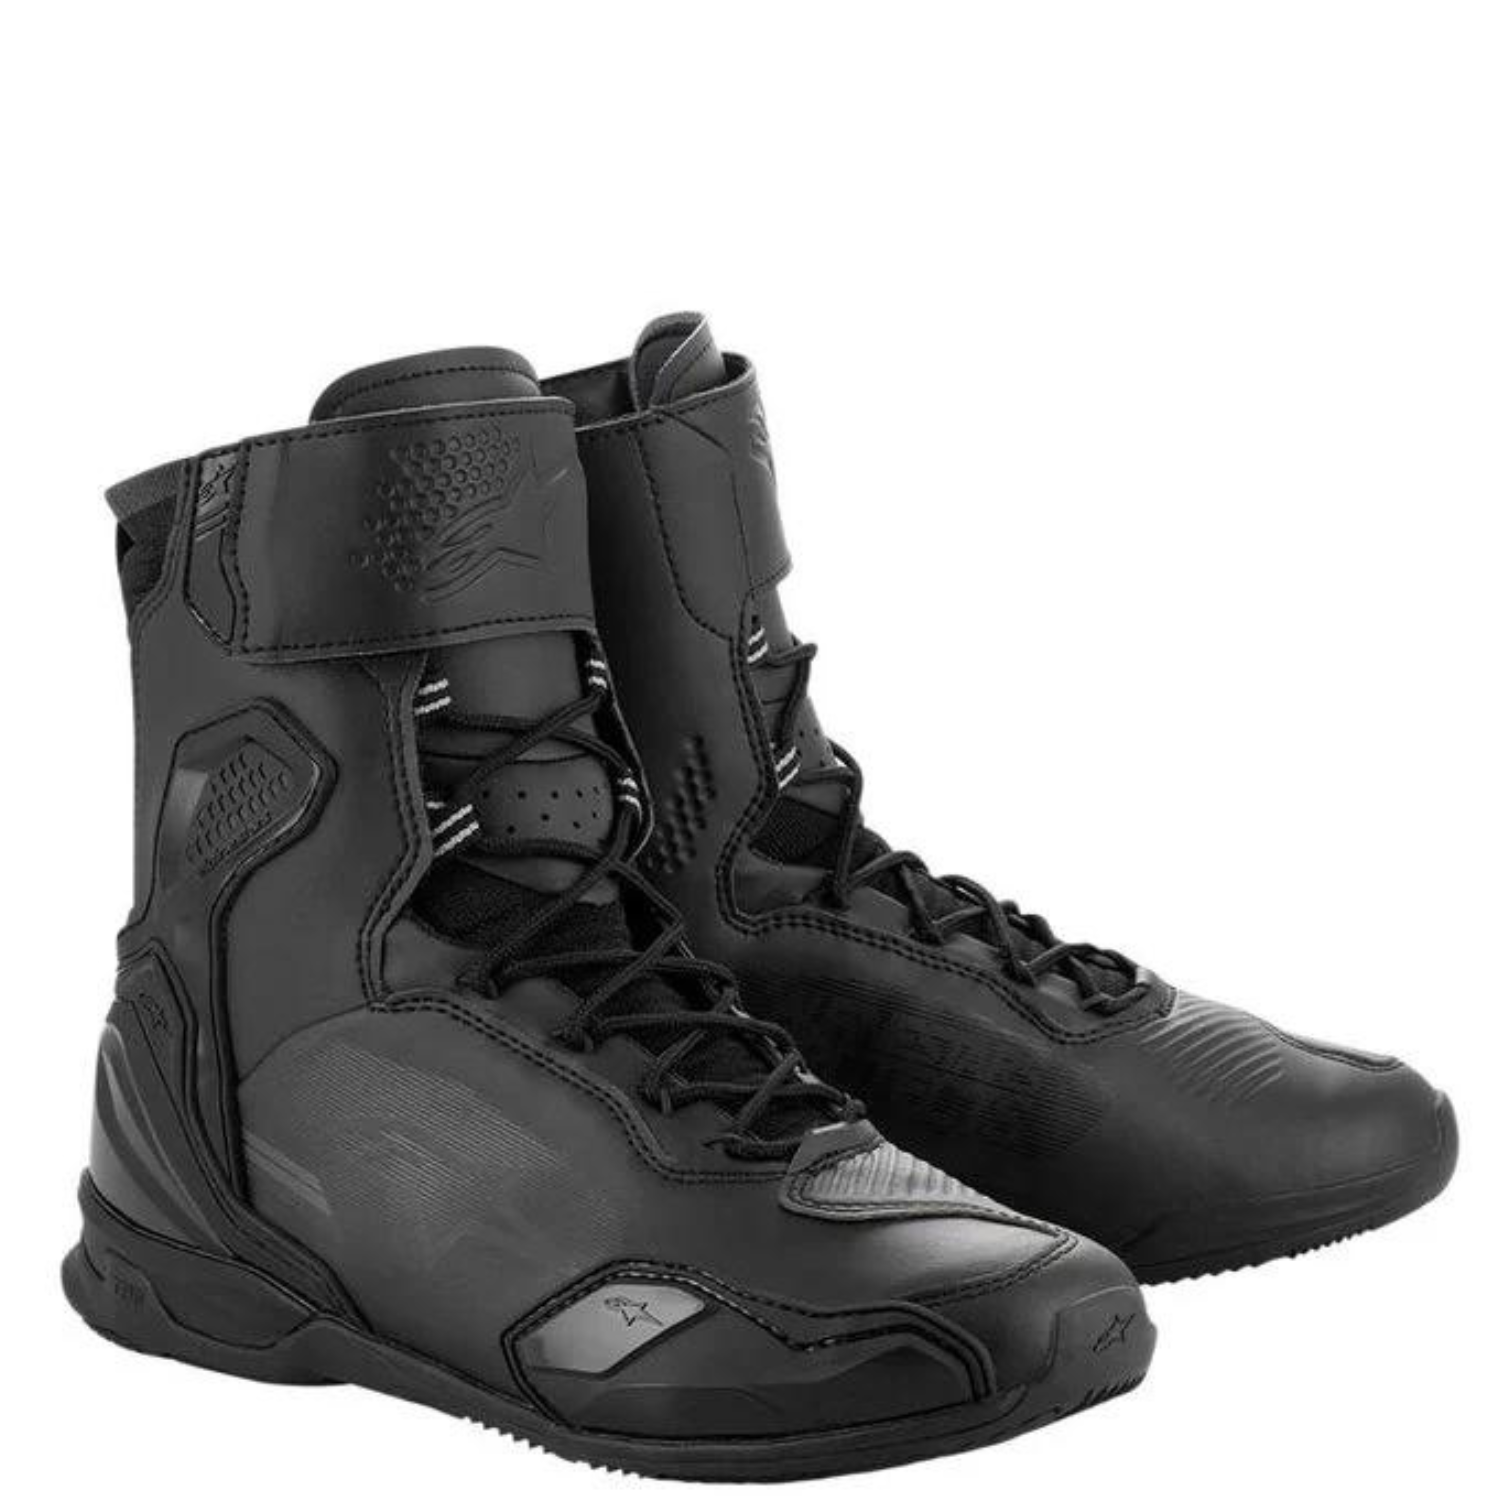 Image of Alpinestars Superfaster Shoes Black Size US 7 ID 8059347260600